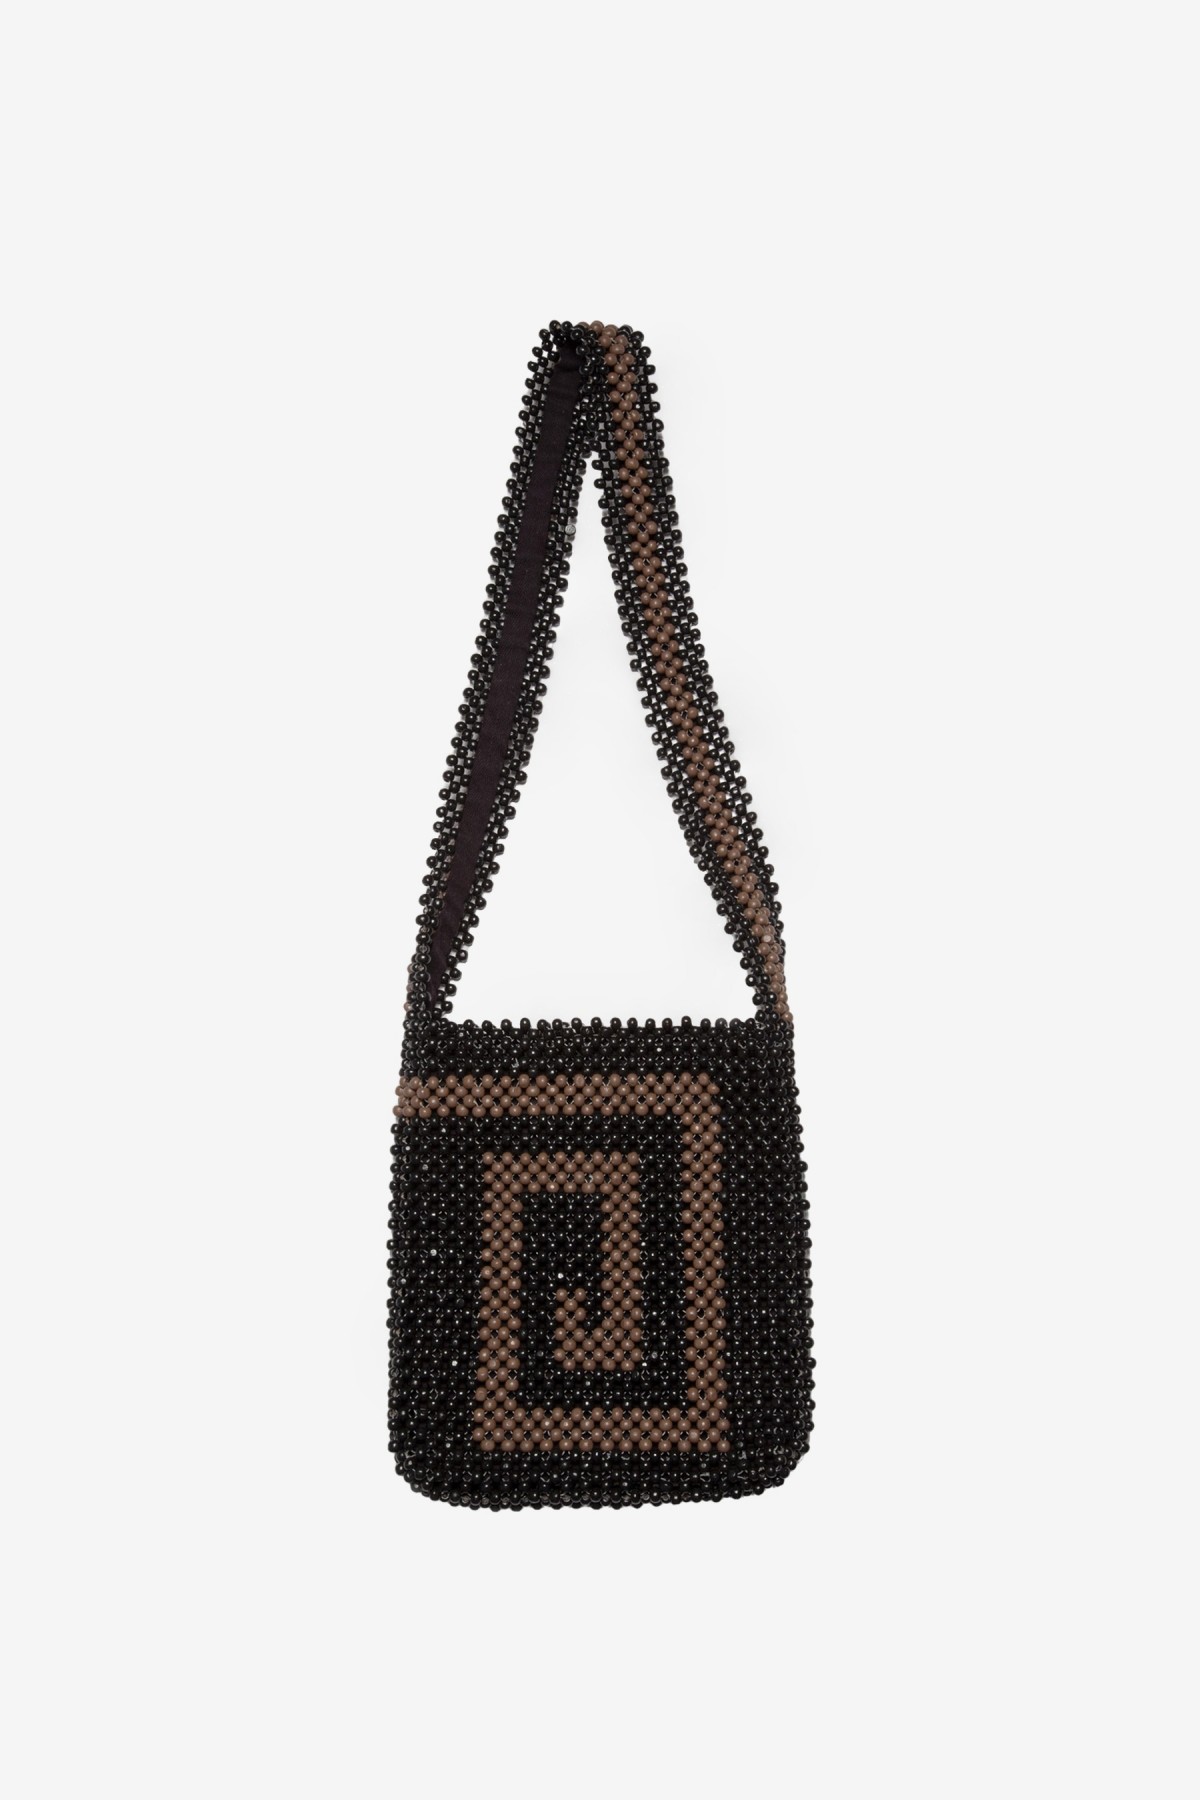 YMC You Must Create Pilgrim Bag in Brown/Black